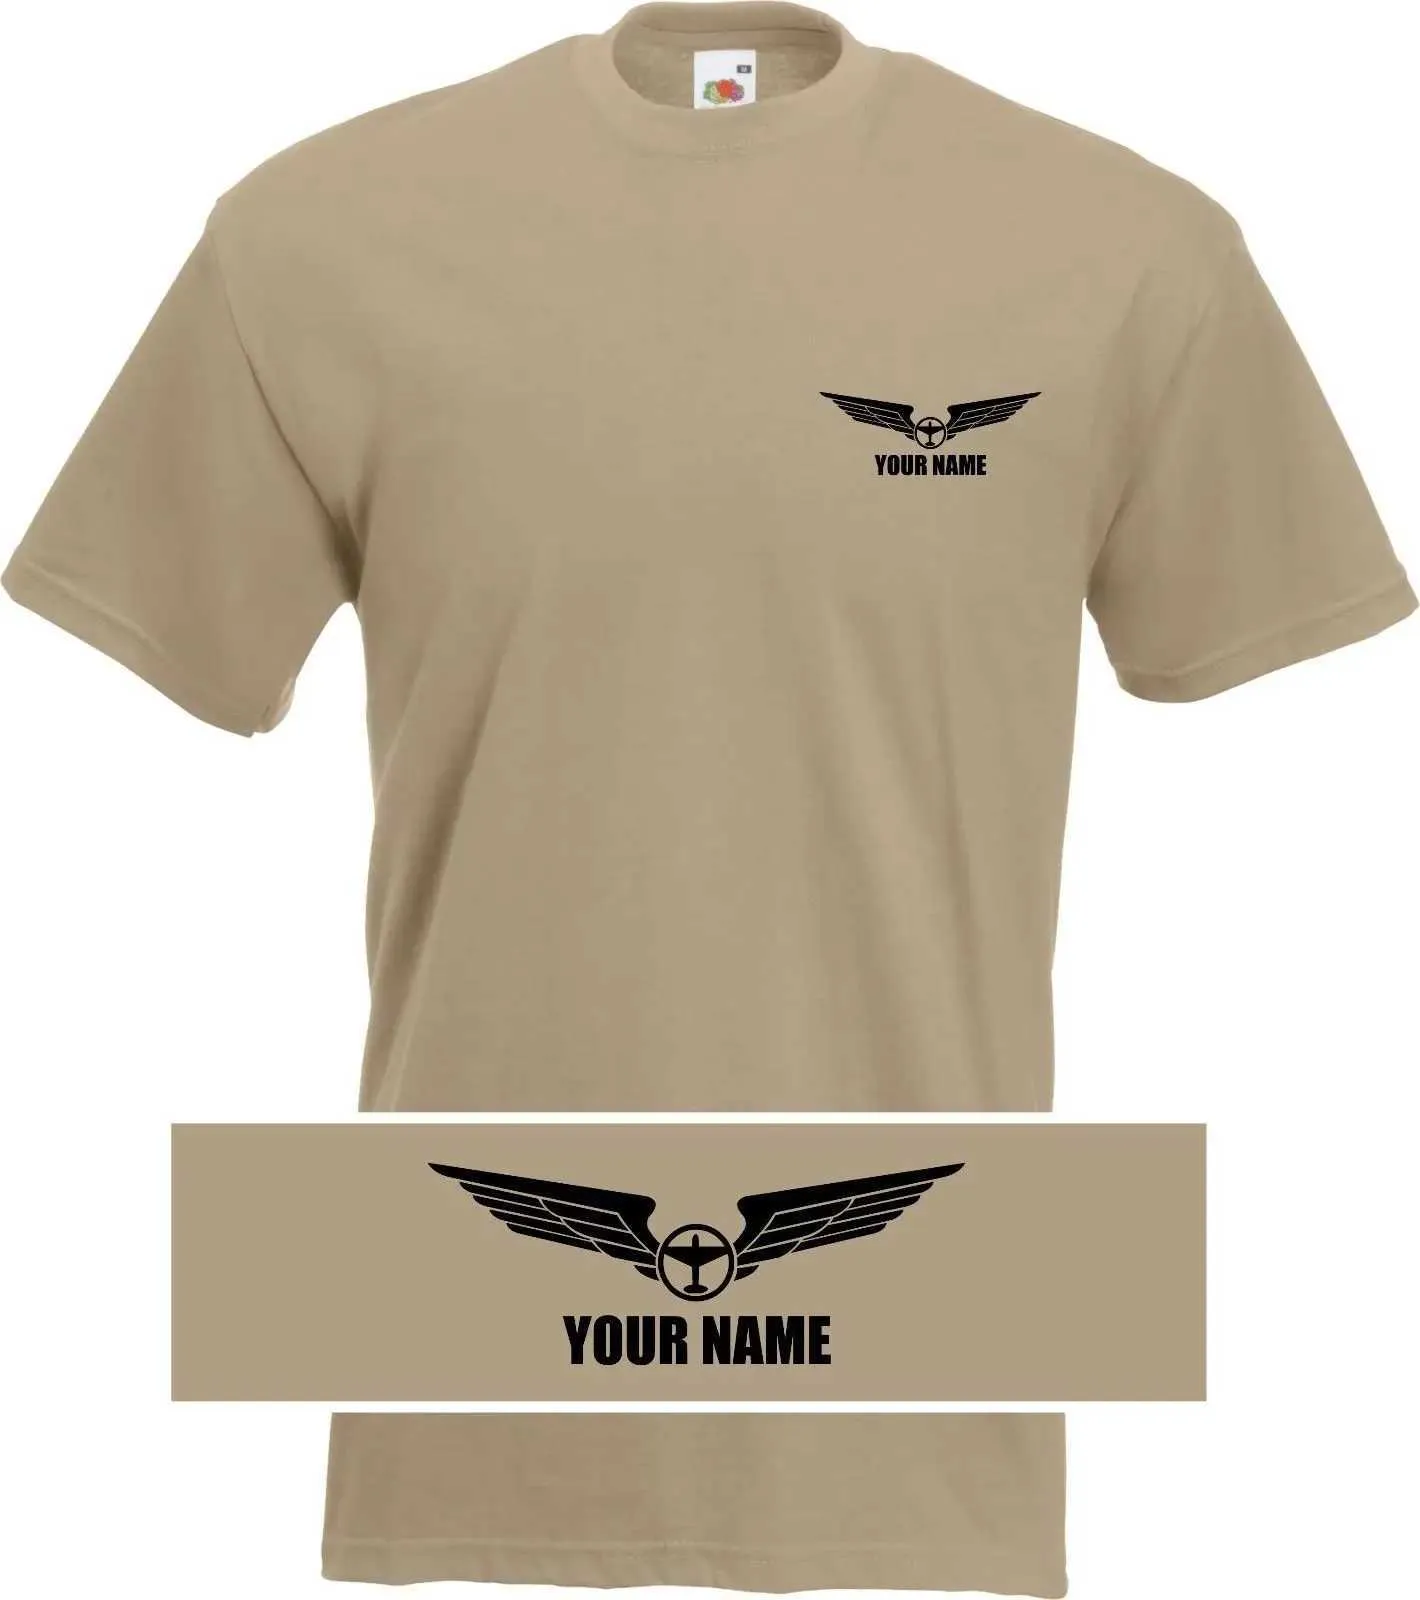 Camisetas para hombres Vuelo de ala personalizado para pilotos de avión Camiseta personalizada para hombres 2019 Diseño de cuello O-cuello para adultos Camiseta de ajuste casual J240228